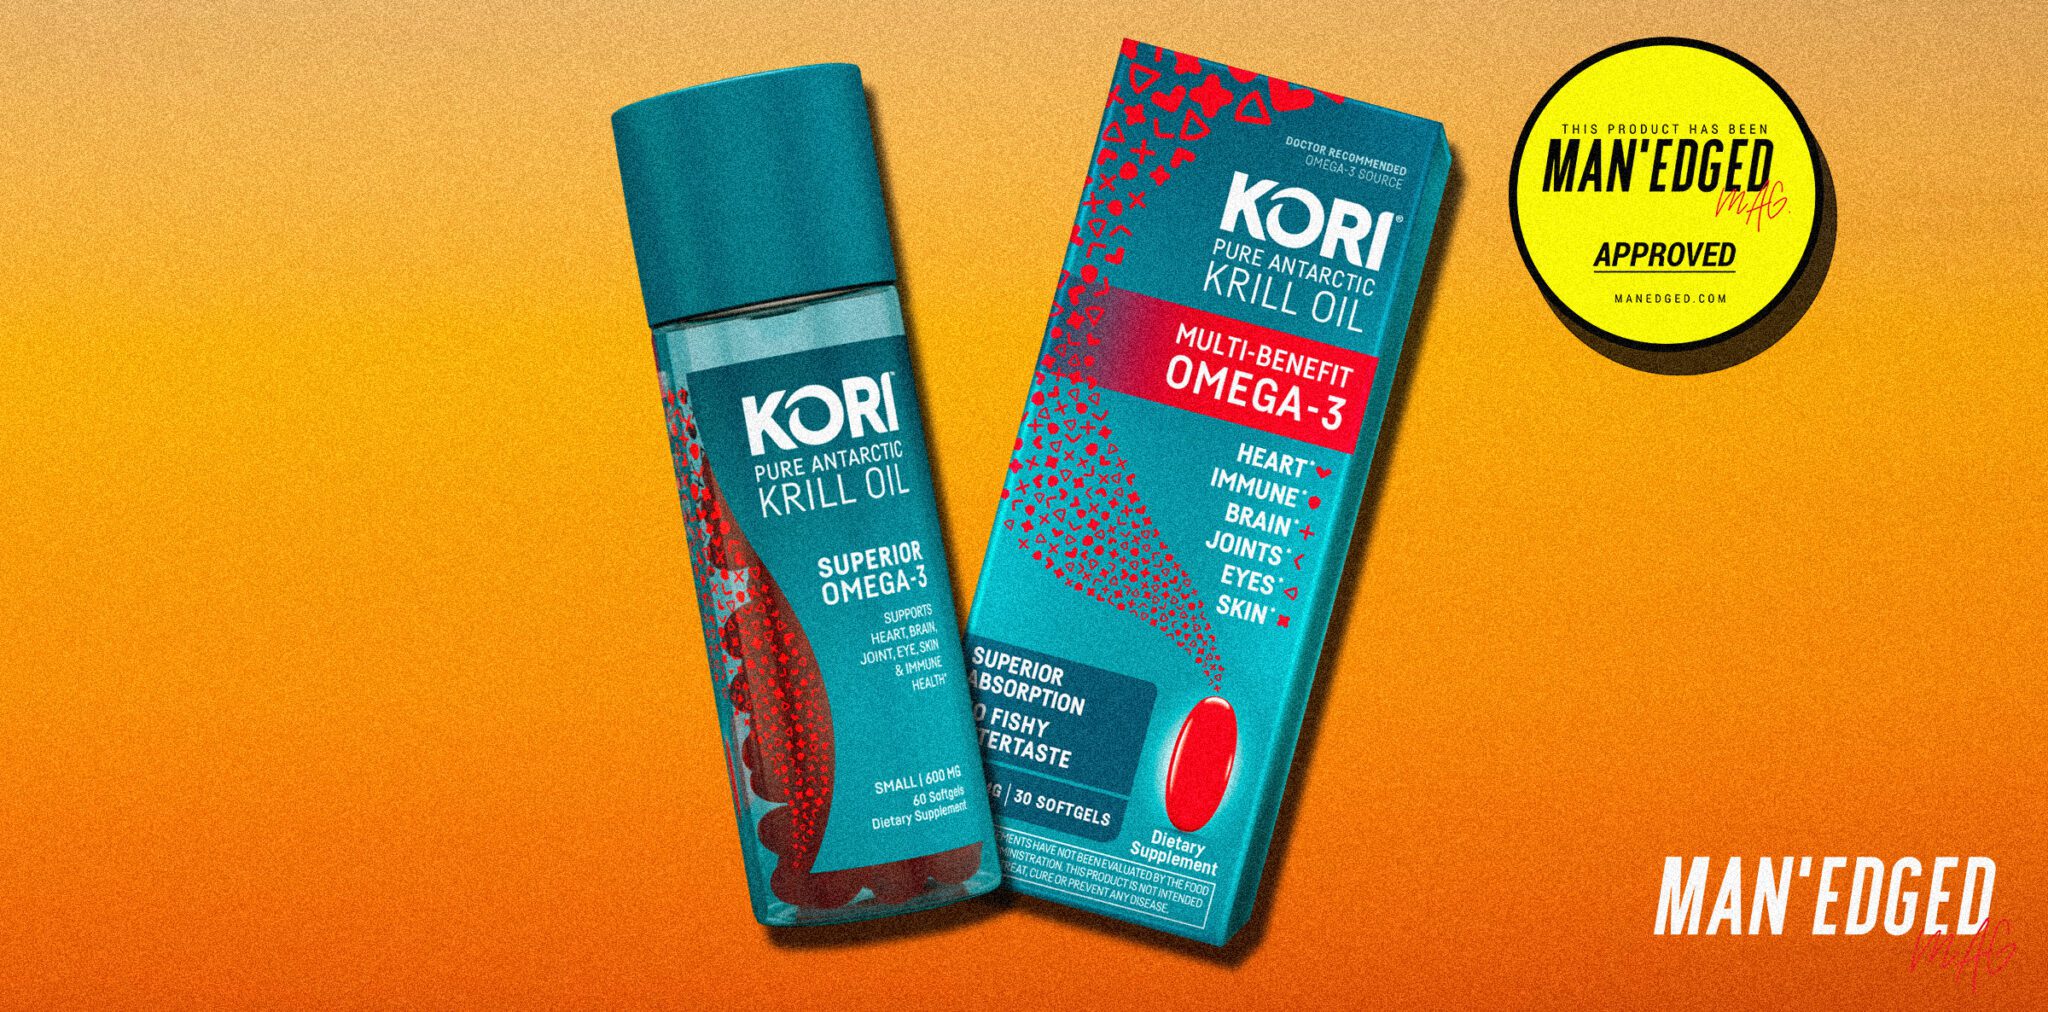 valentines bag ideas for him featuring kori krill oil